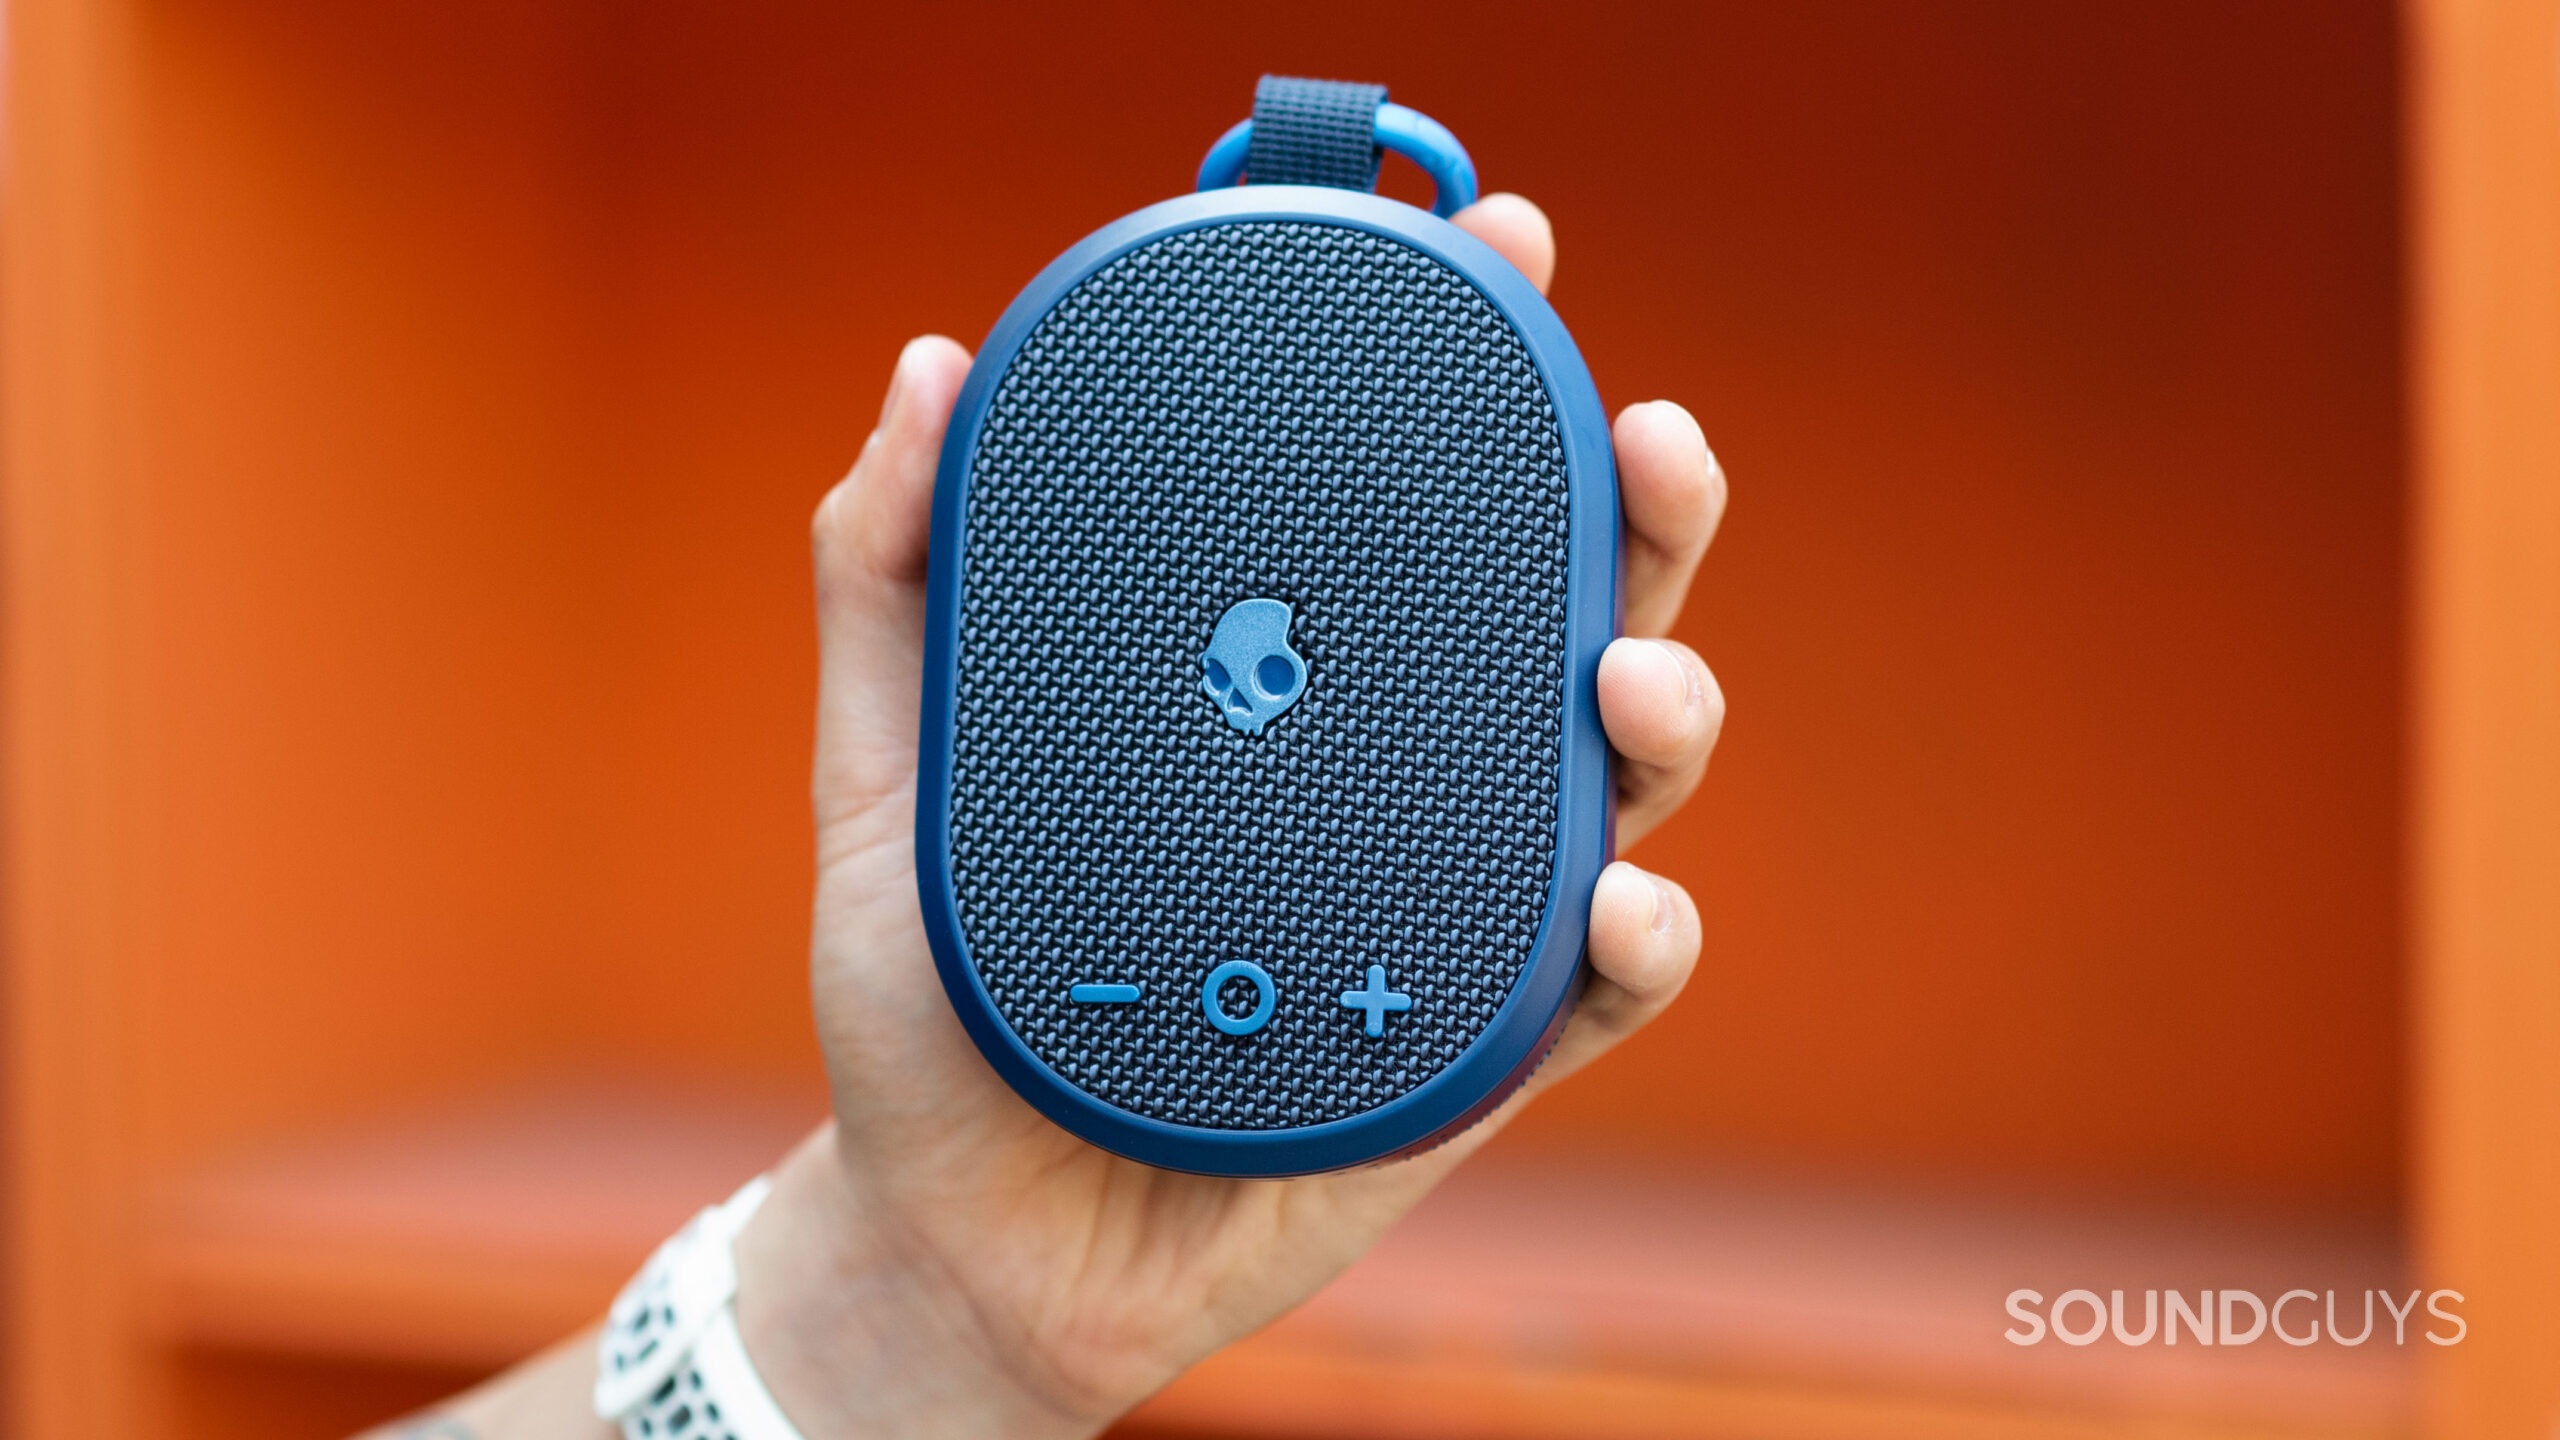 A hand holds the Skullcandy Kilo Bluetooth speaker against an orange background.